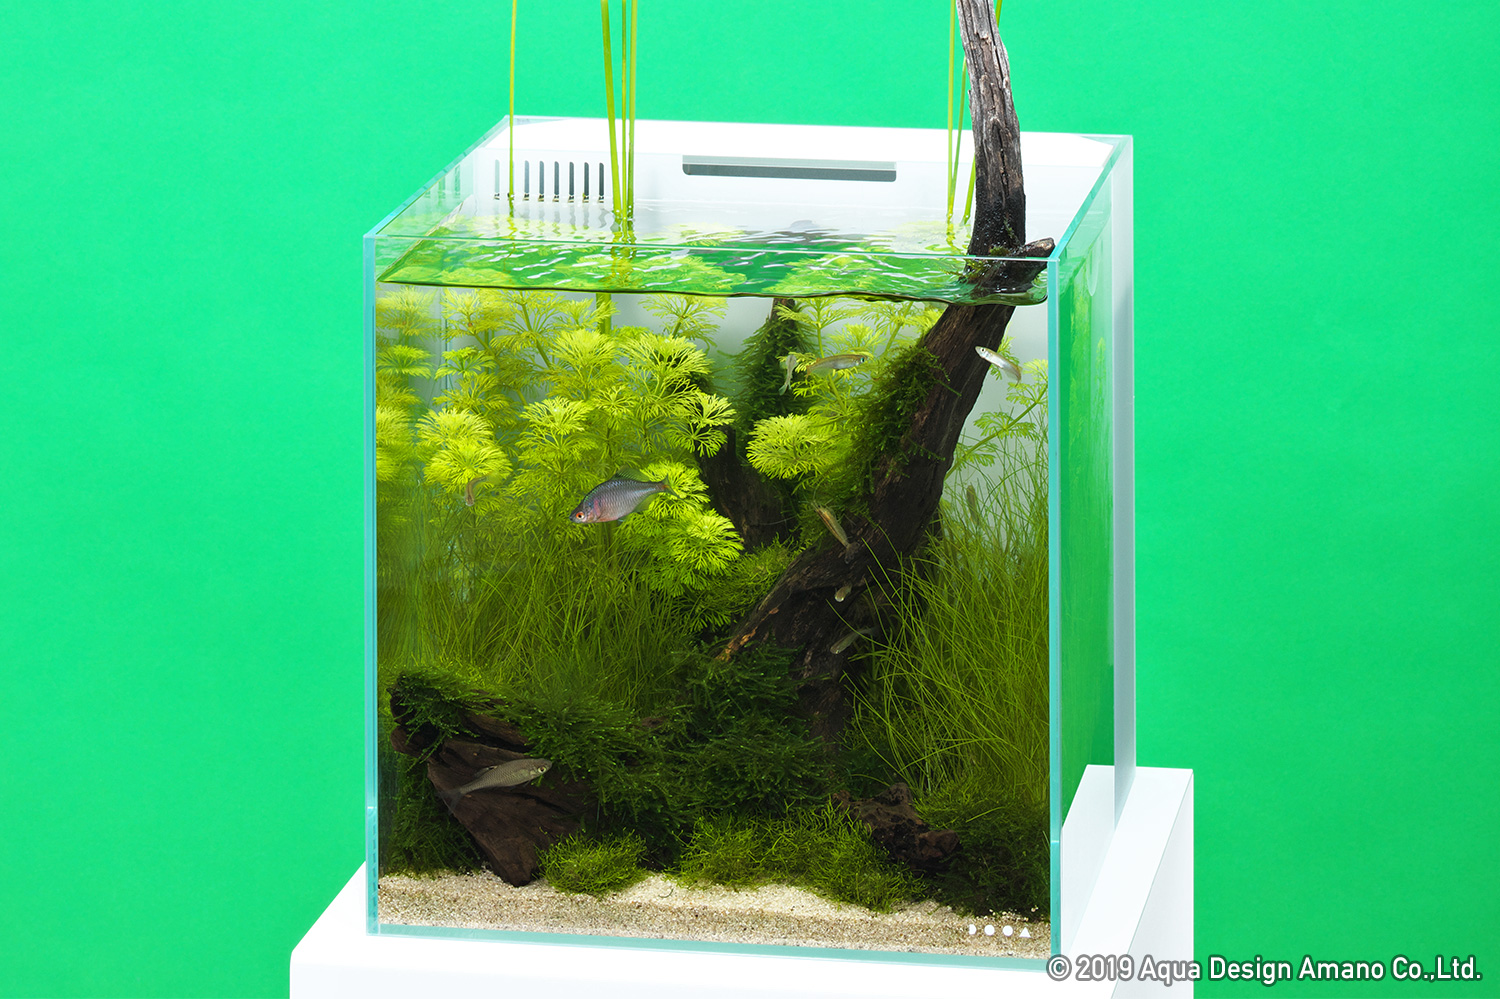 Enjoy Dooa 夏の潟をイメージしたシンプルな日本産水景 Aqua Design Amano